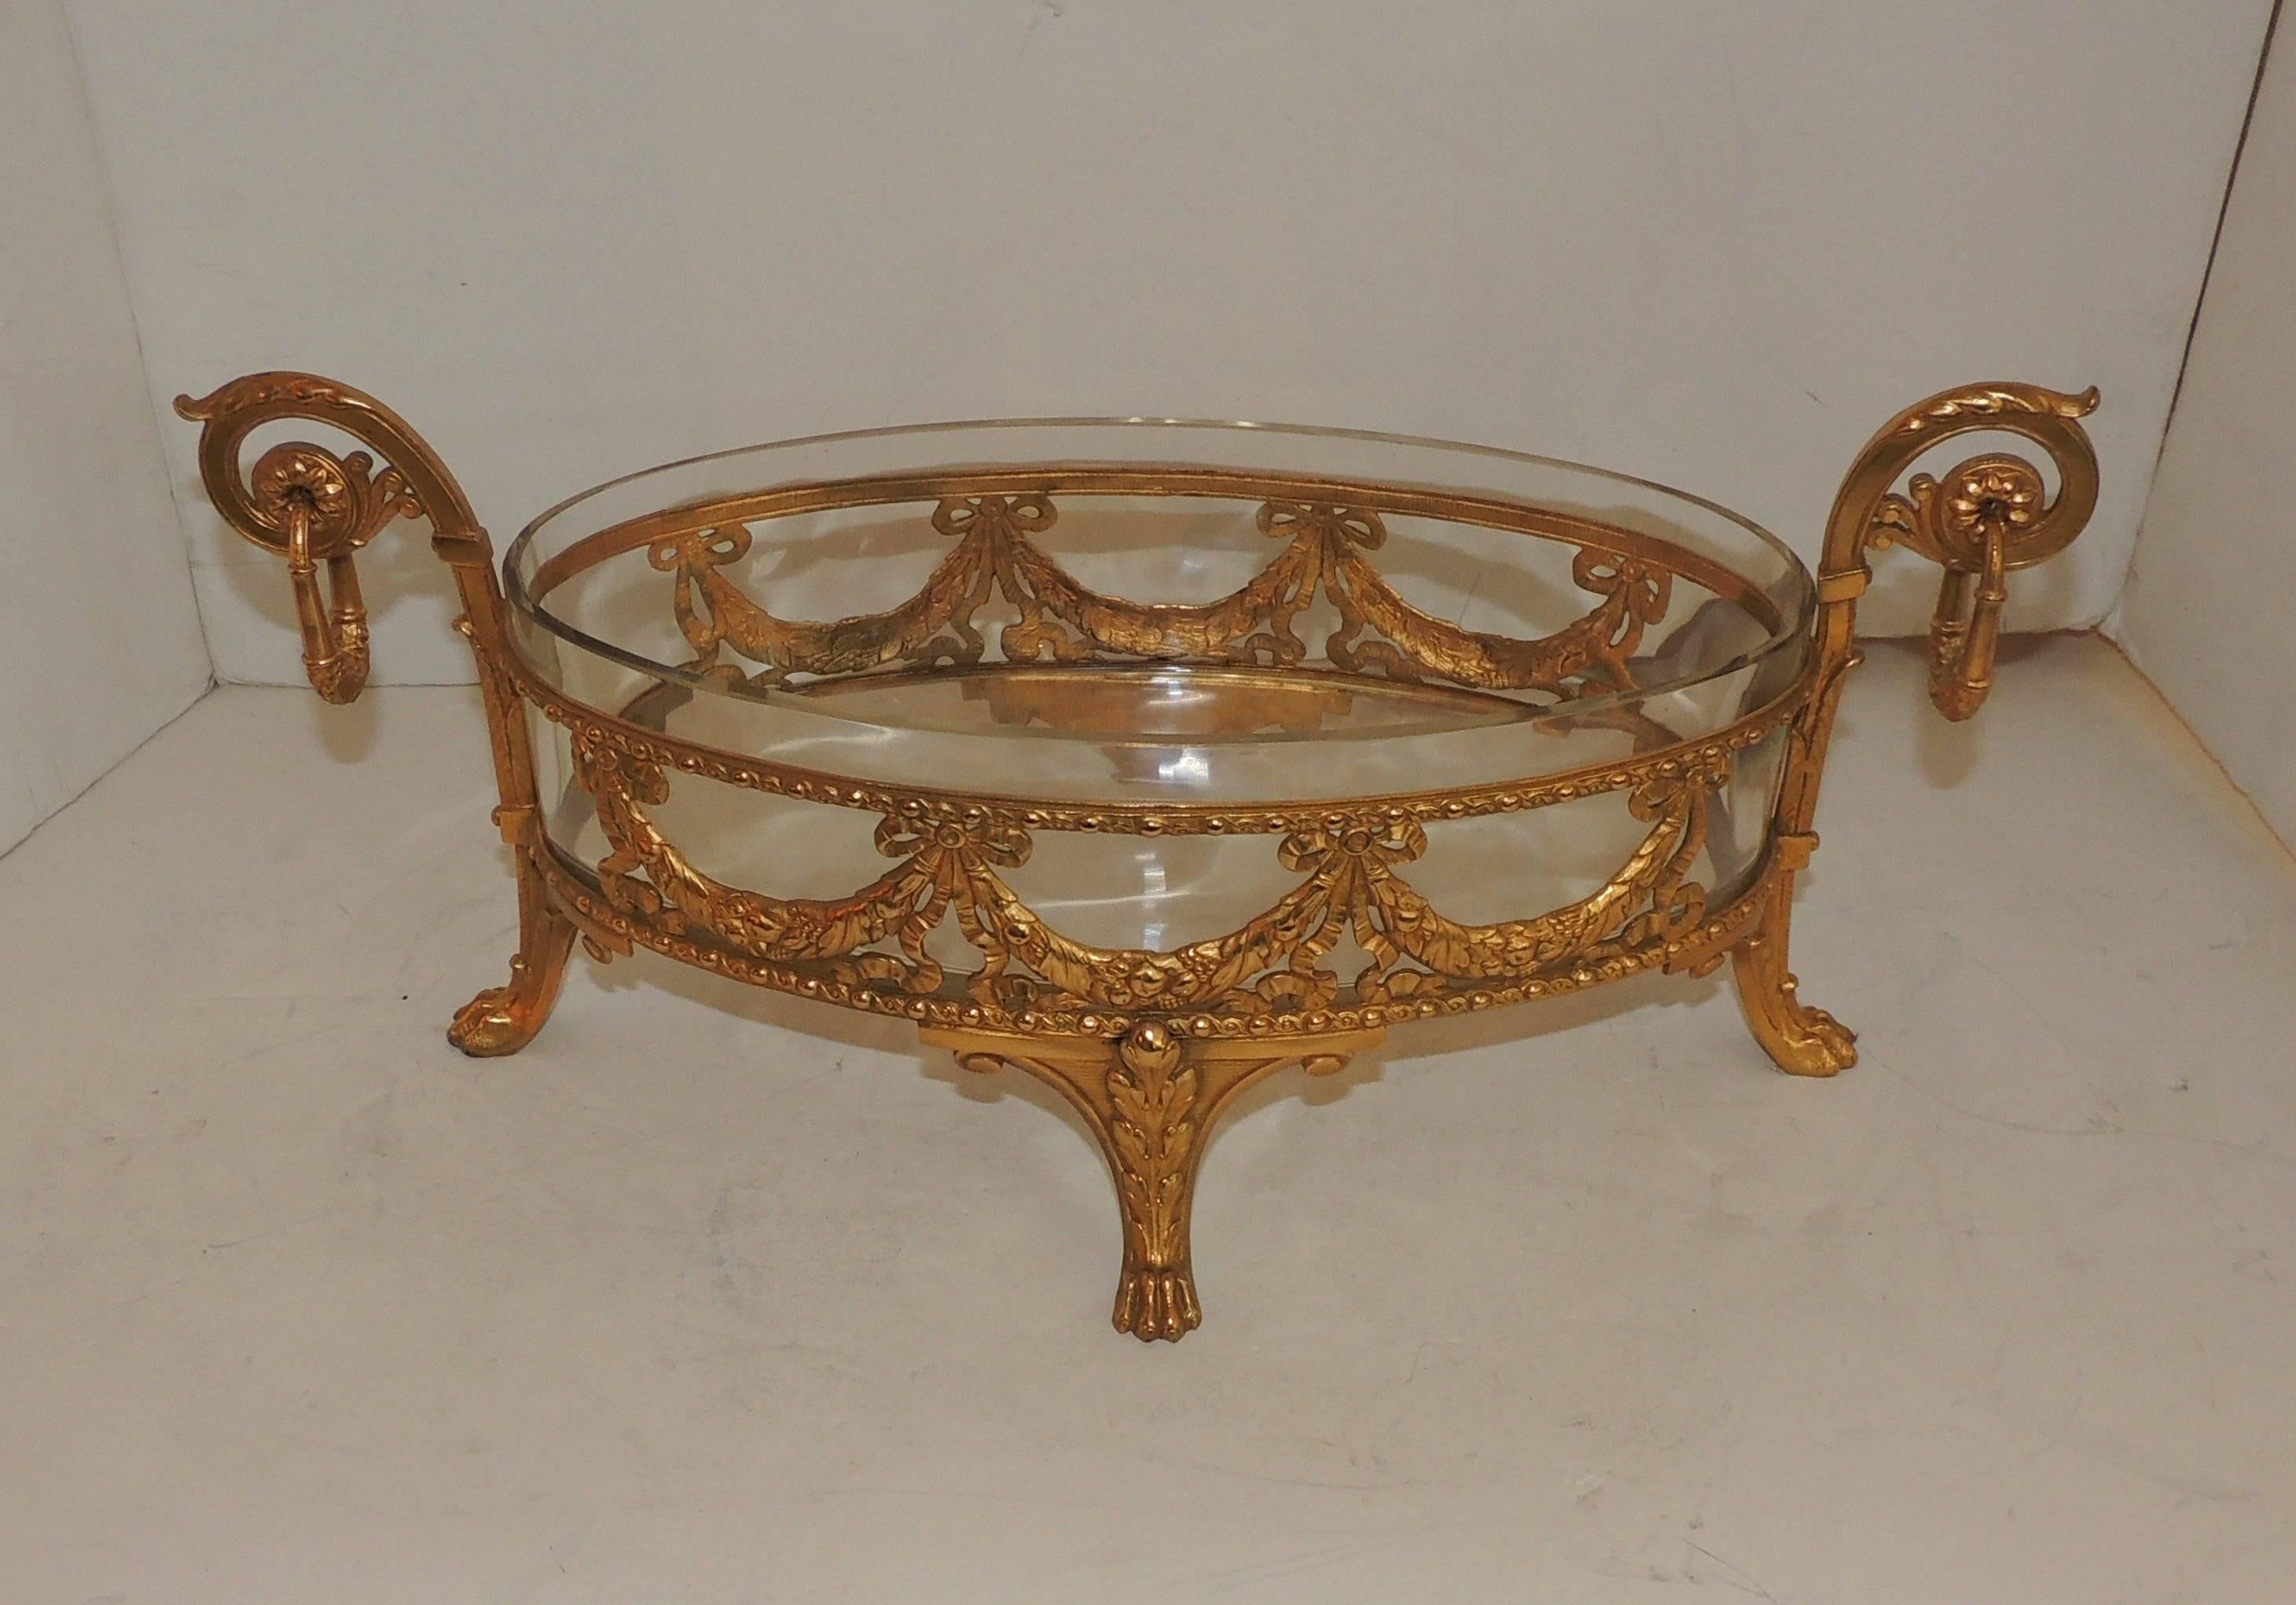 Doré bronze crystal oval bowl centerpiece Ormolu bows filigree swag paw feet.

Measures: 17